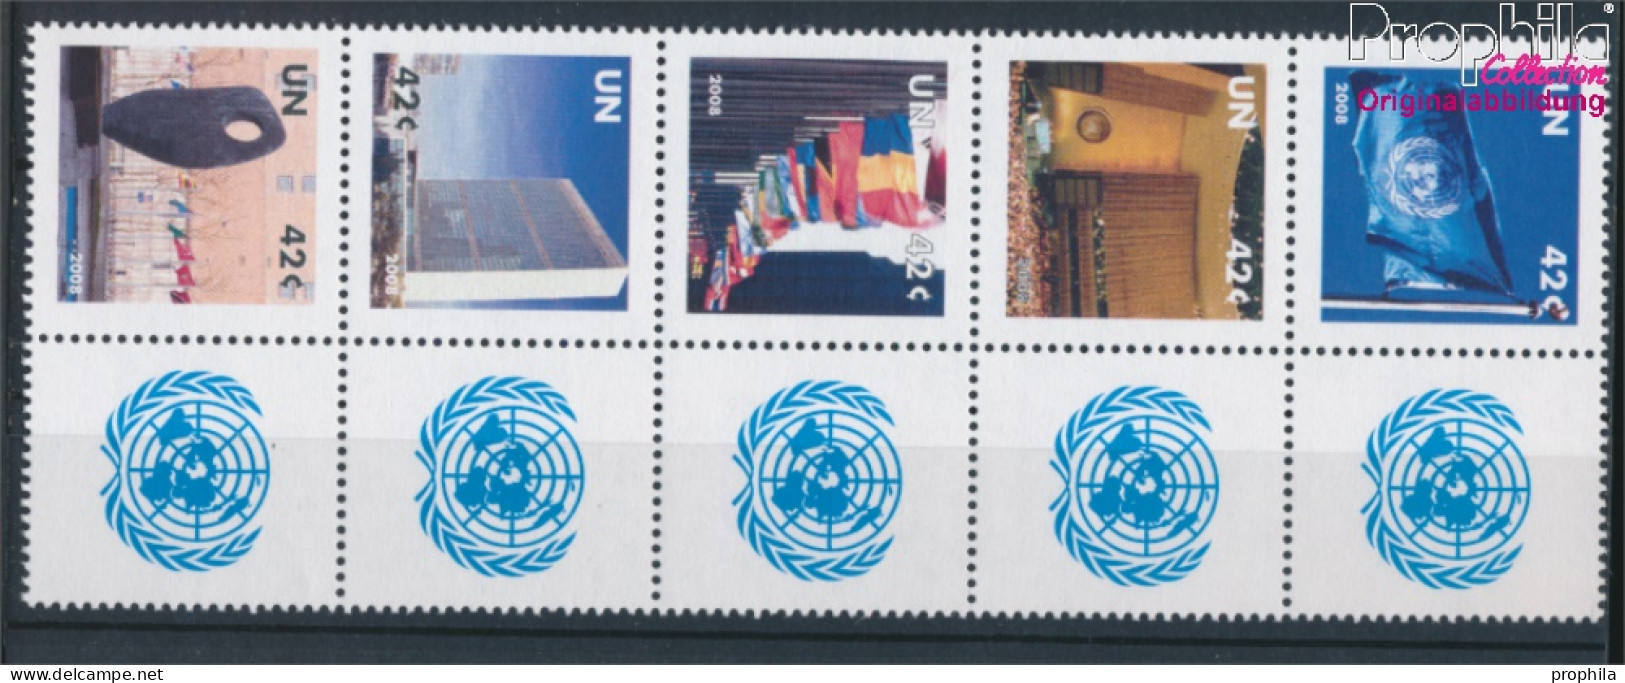 UNO - New York 1091-1095 Zehnerblock (kompl.Ausg.) Postfrisch 2008 Grußmarken (10325900 - Ongebruikt